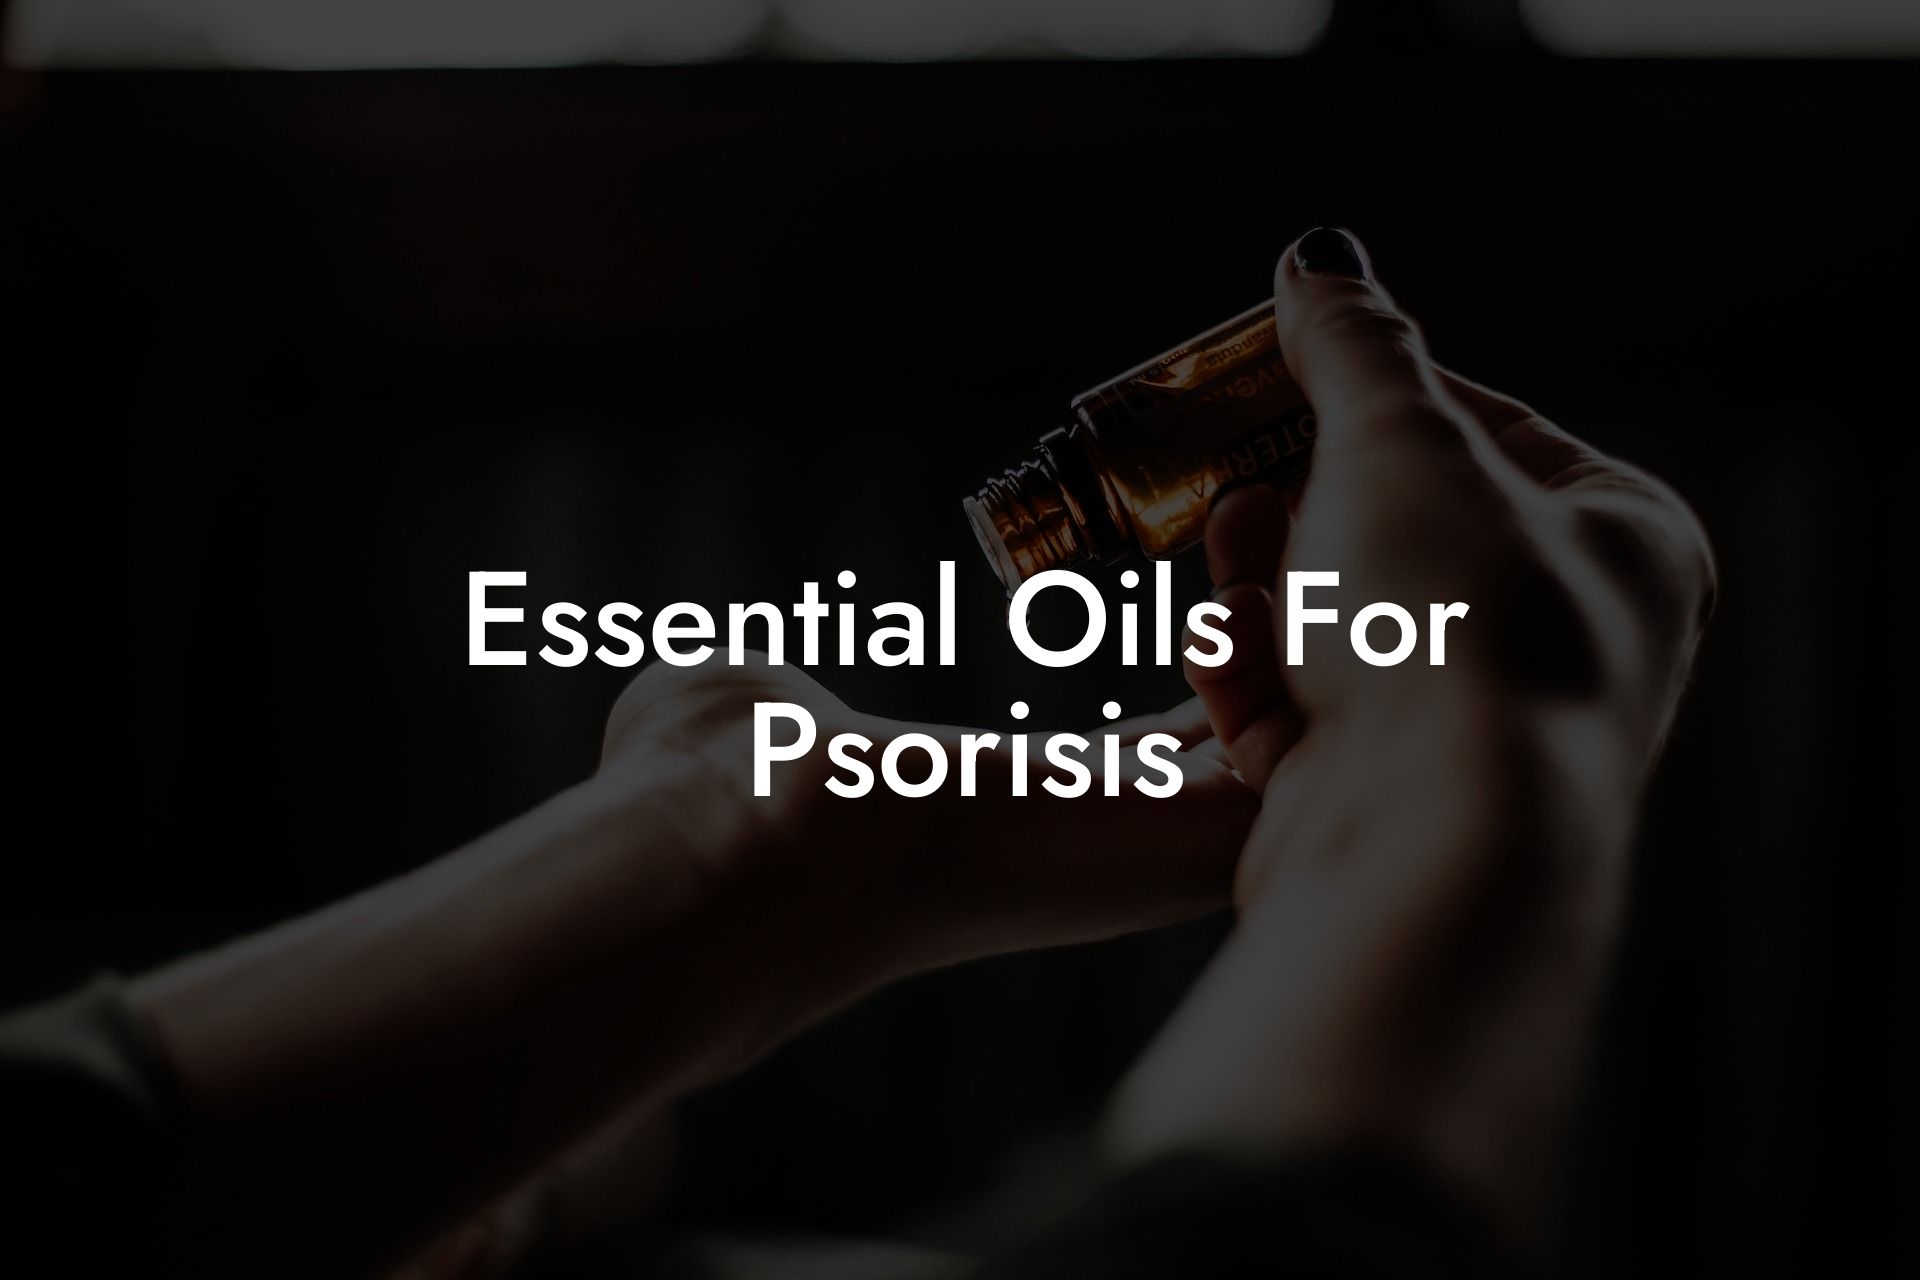 Essential Oils For Psorisis